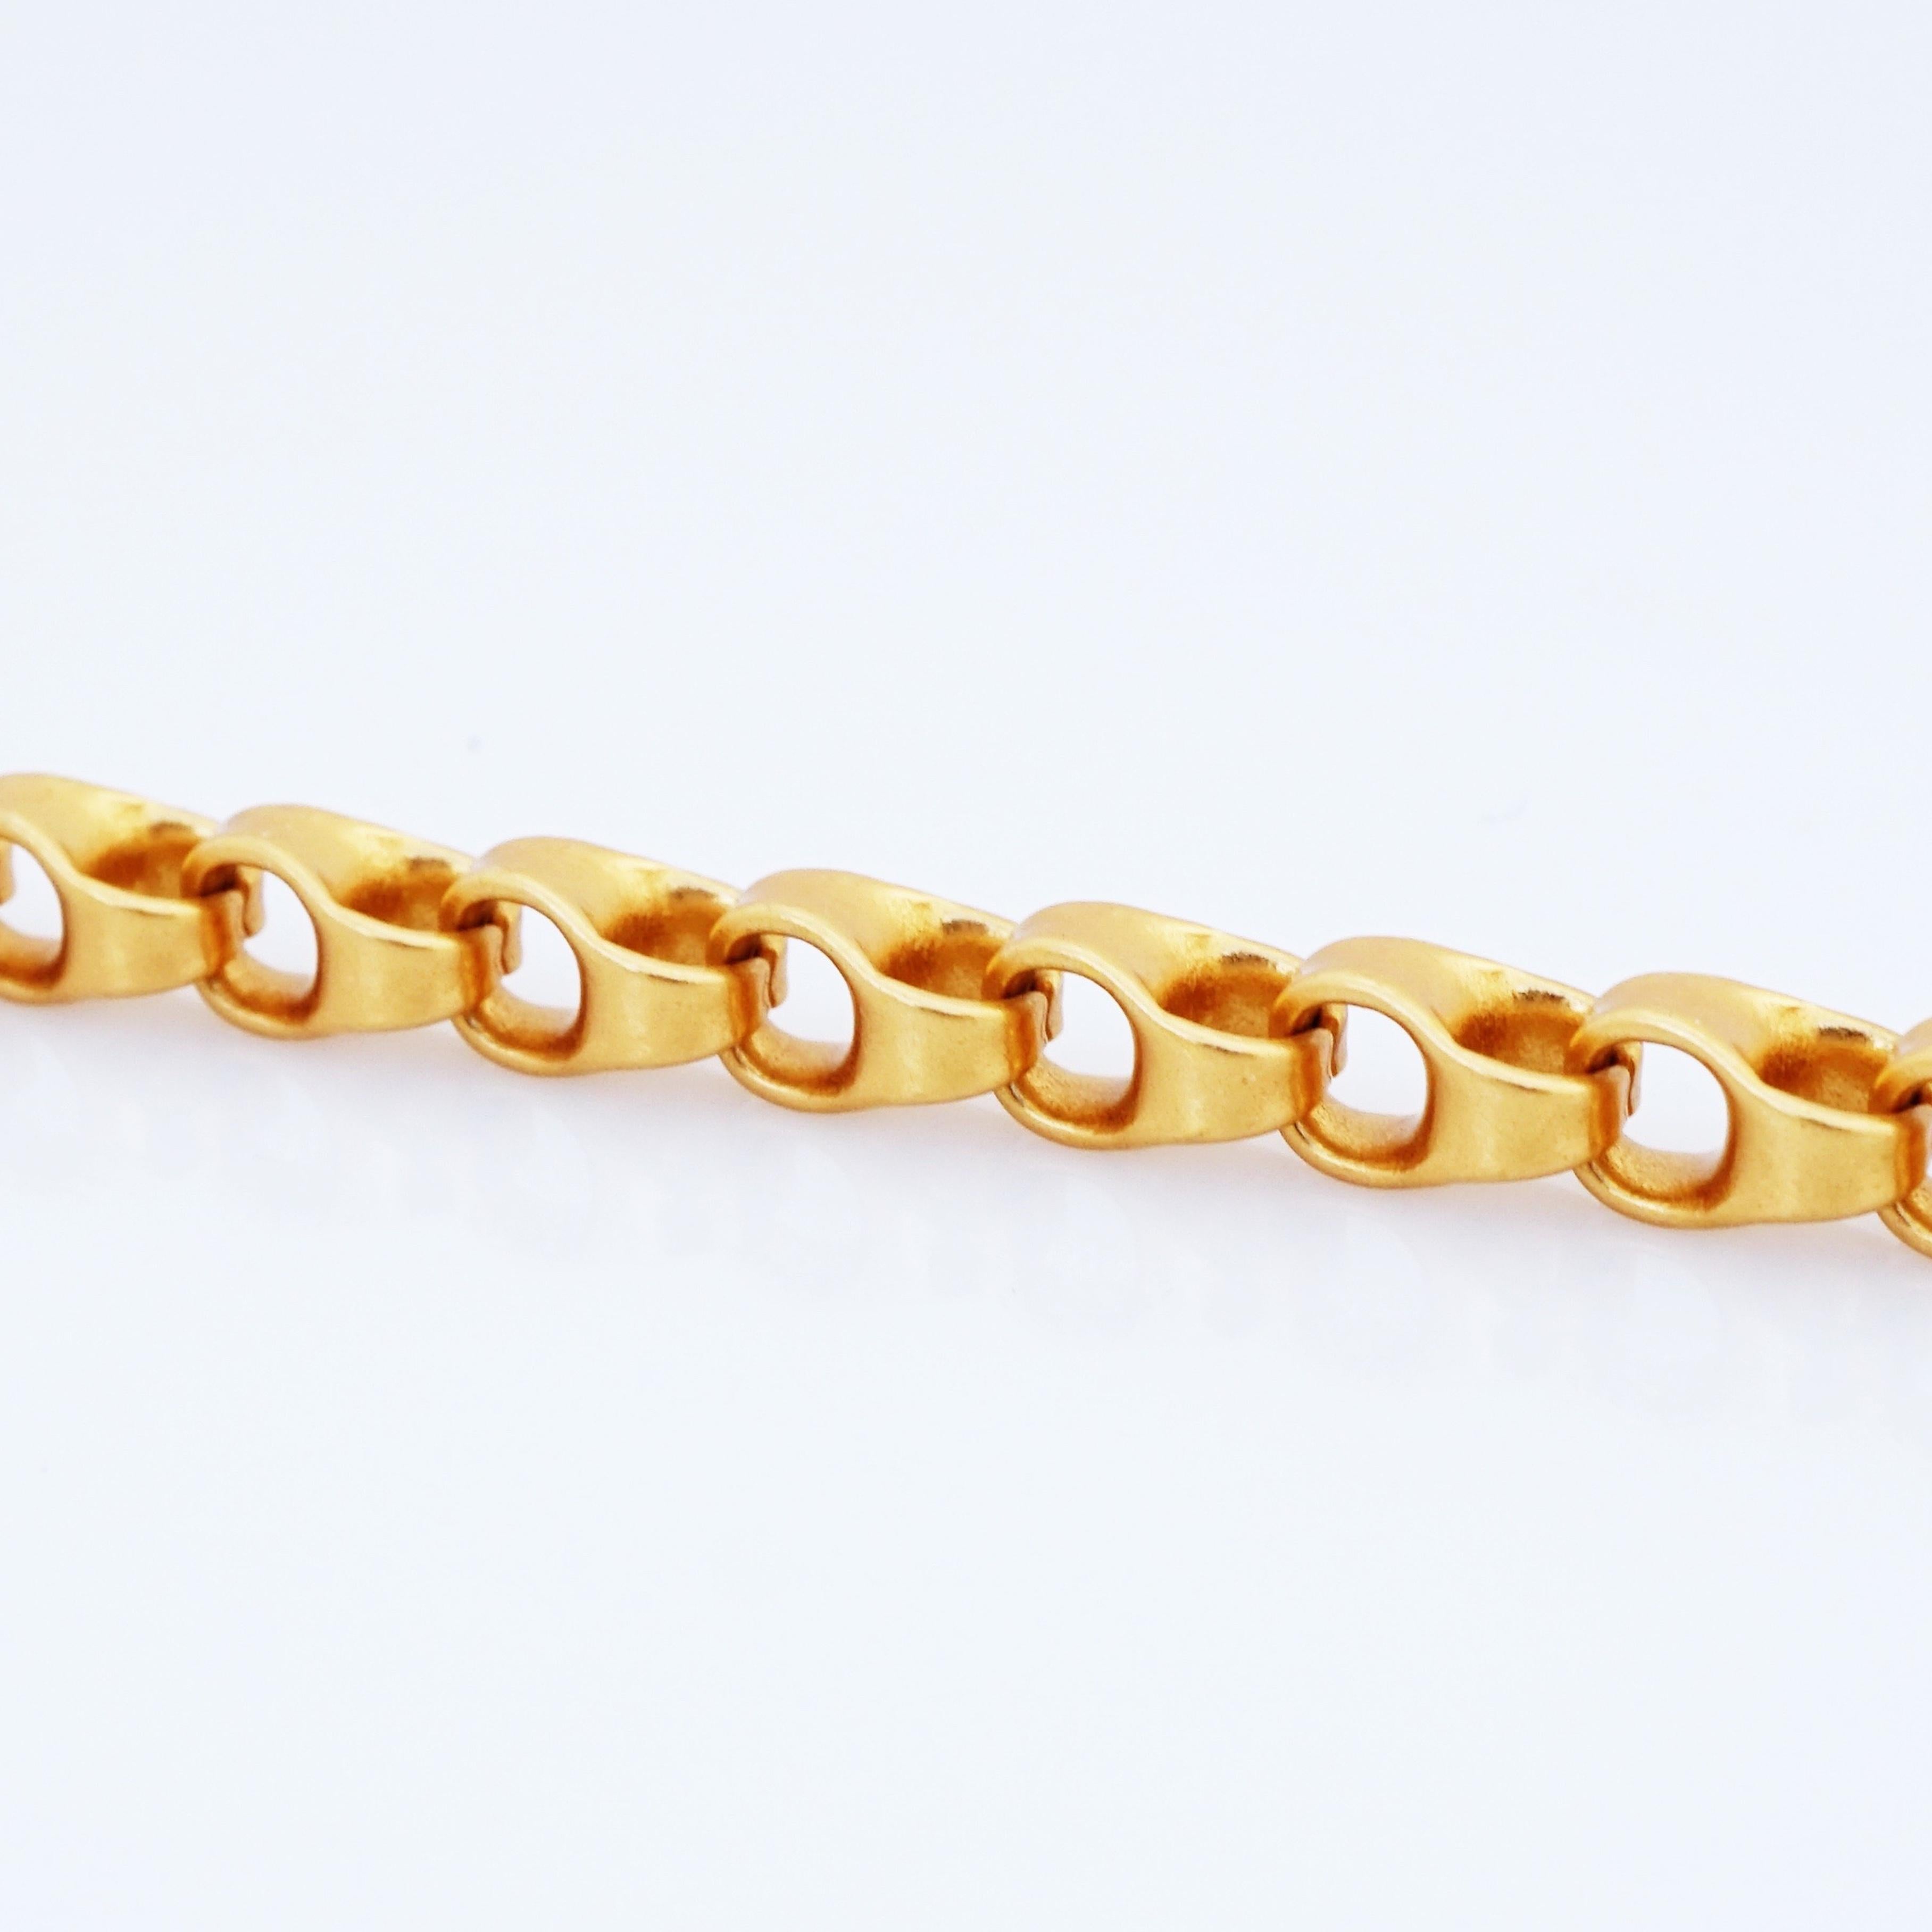 24 length chain